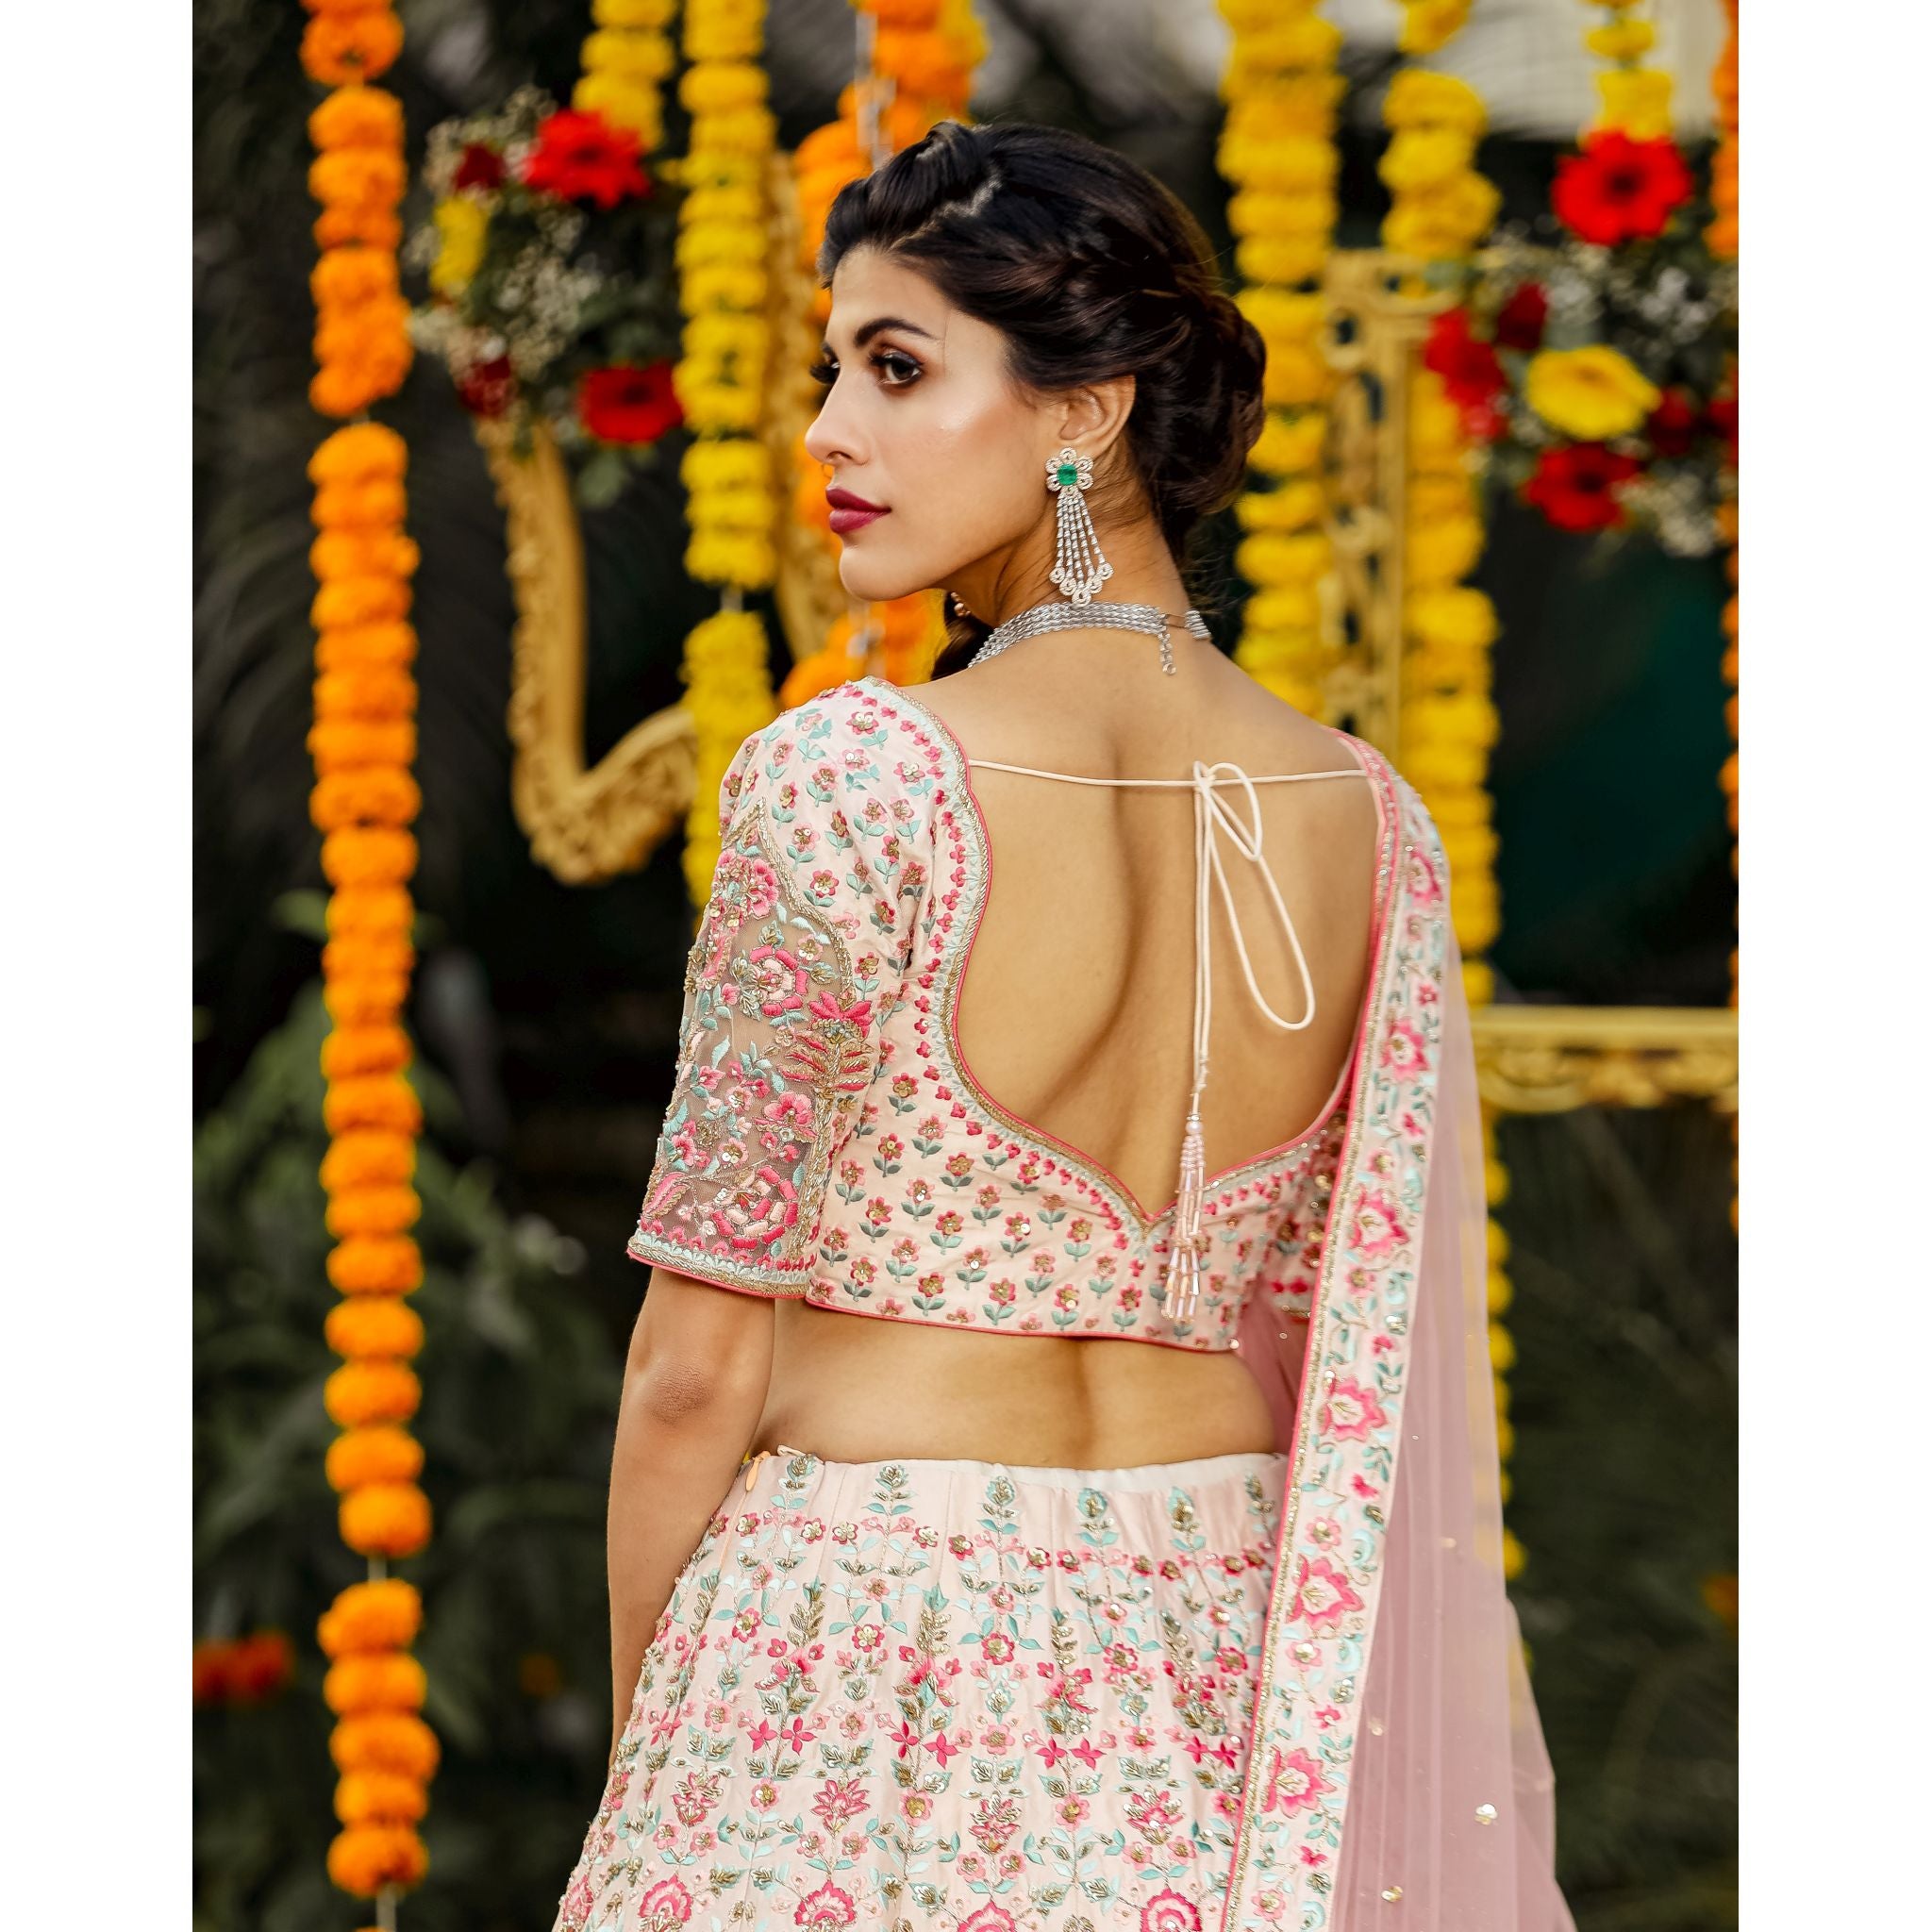 Pink Floral Lehenga Set - Indian Designer Bridal Wedding Outfit